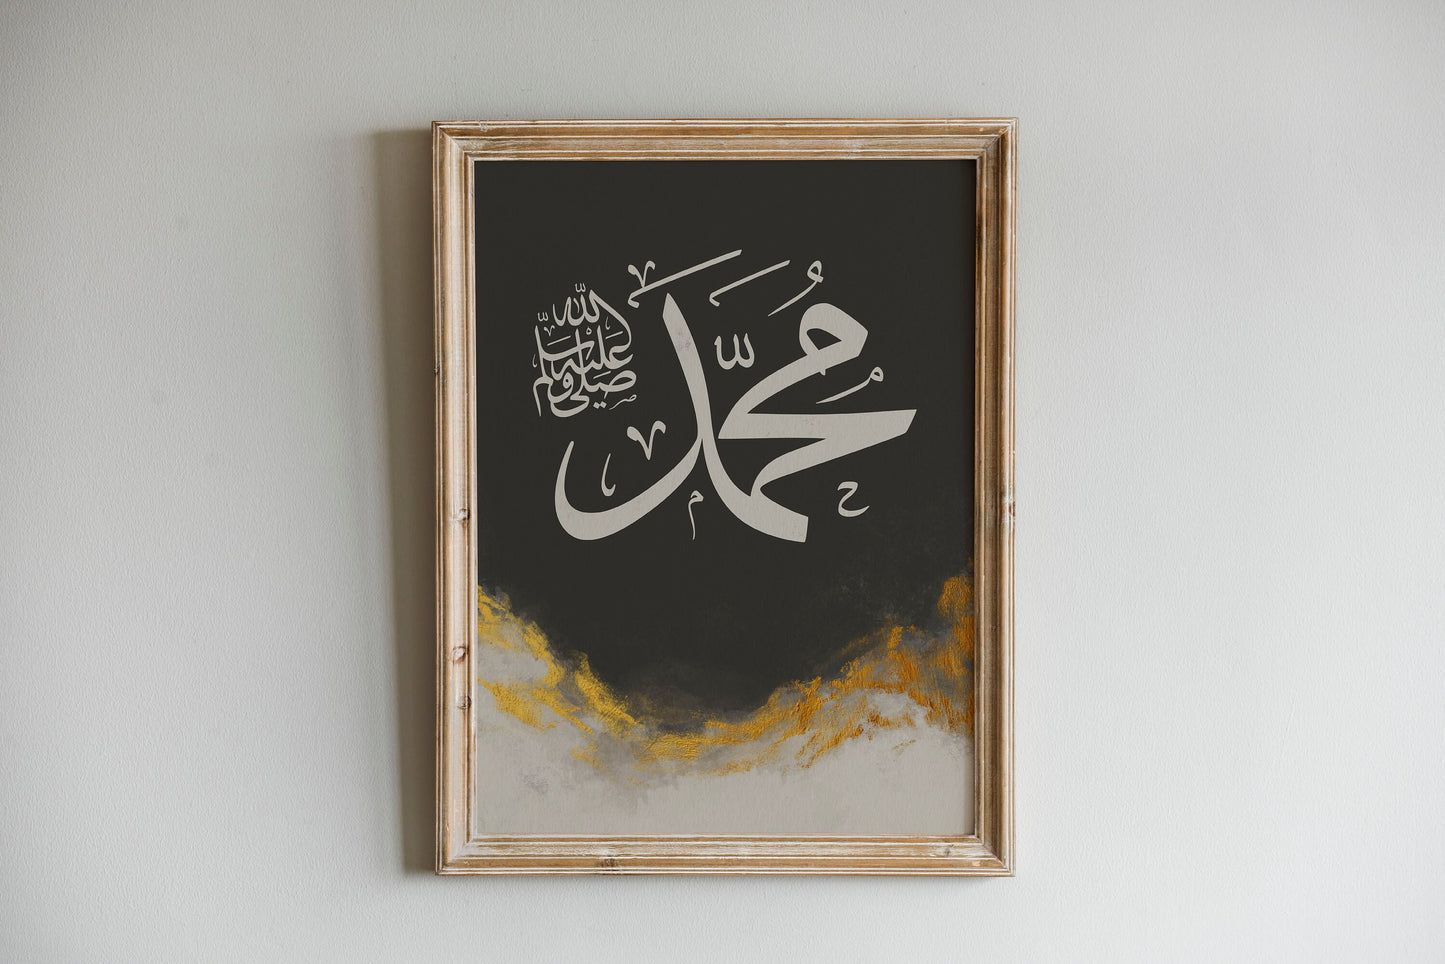 Muhammad Arabic Calligraphy in Abstract Earthy Gold, Islamic Home Decor, Printable Wall Art, Aesthetic Eid Decor, Ramadan Muslim Gifts